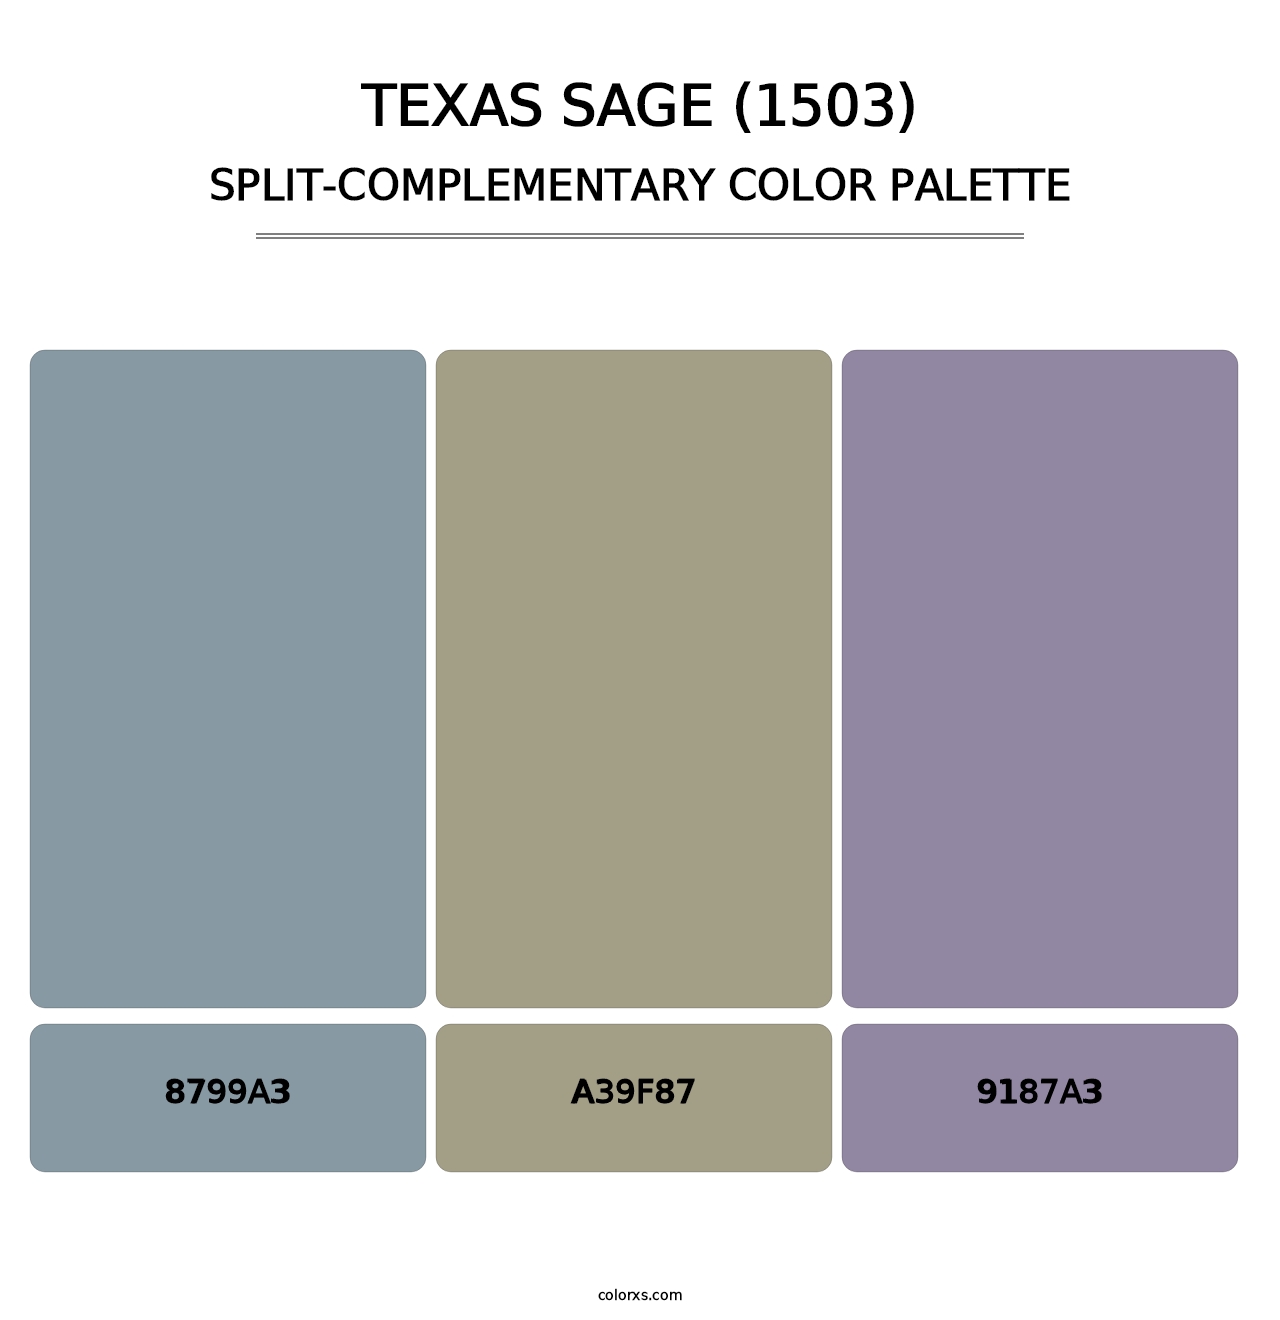 Texas Sage (1503) - Split-Complementary Color Palette